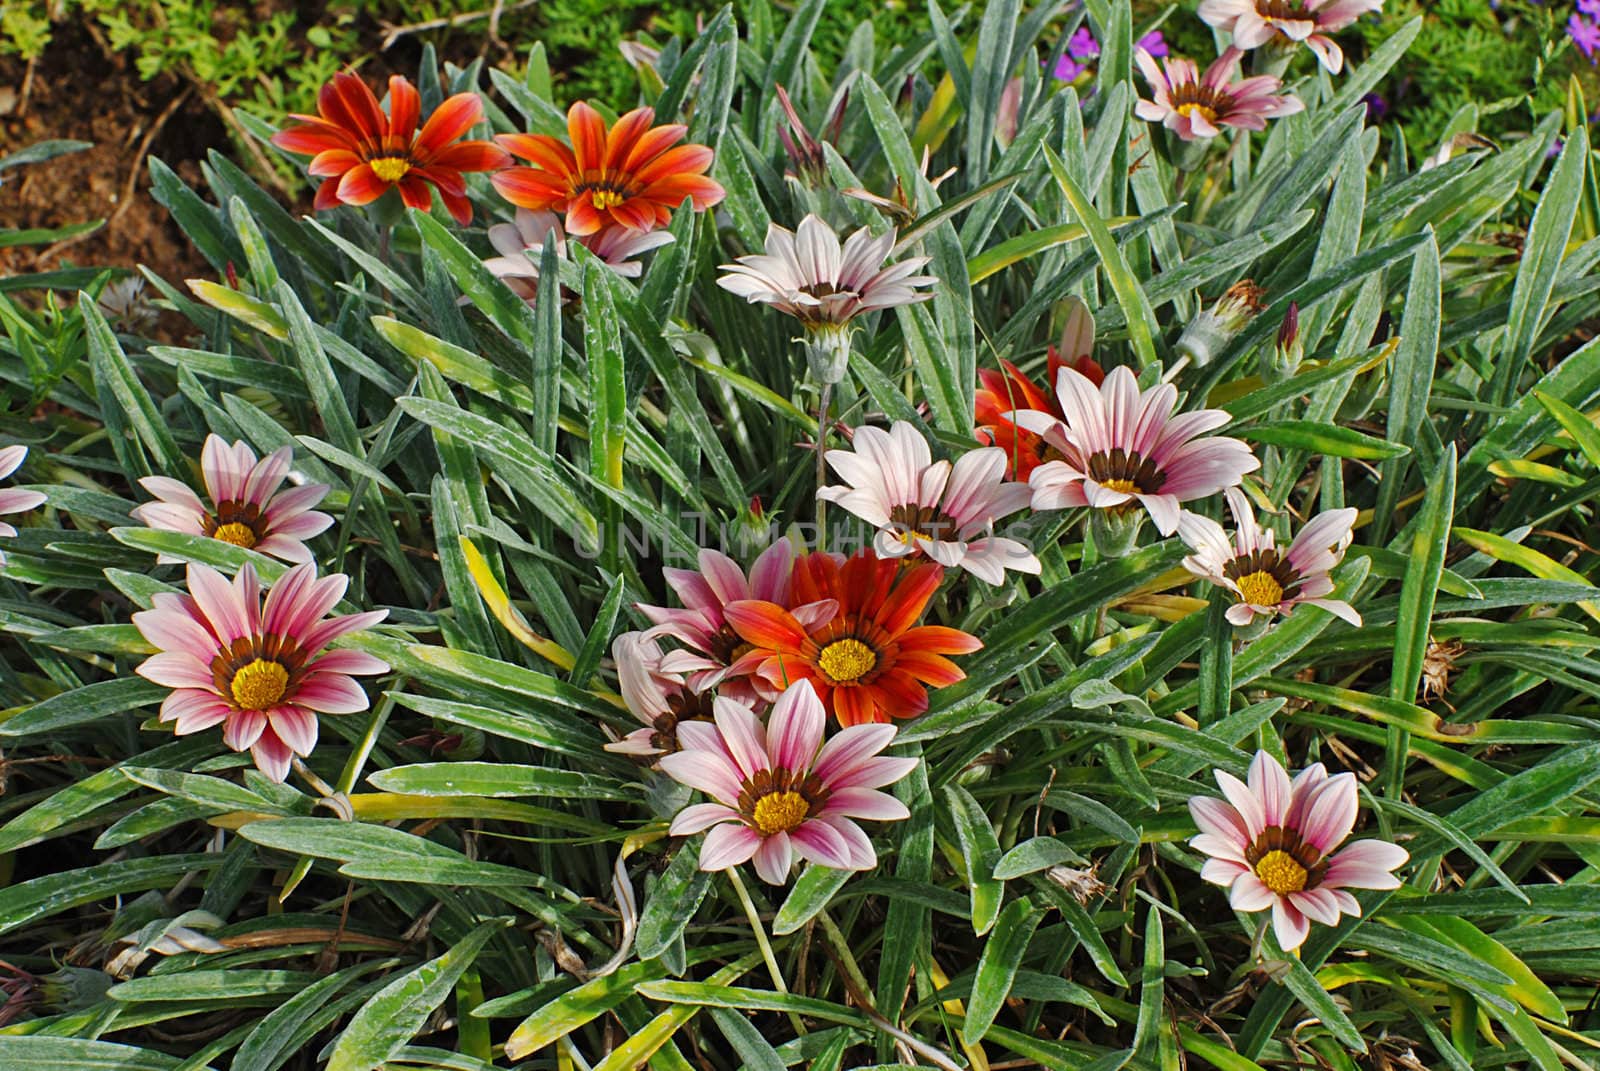 Colorful daisy flowers in the rockery garden